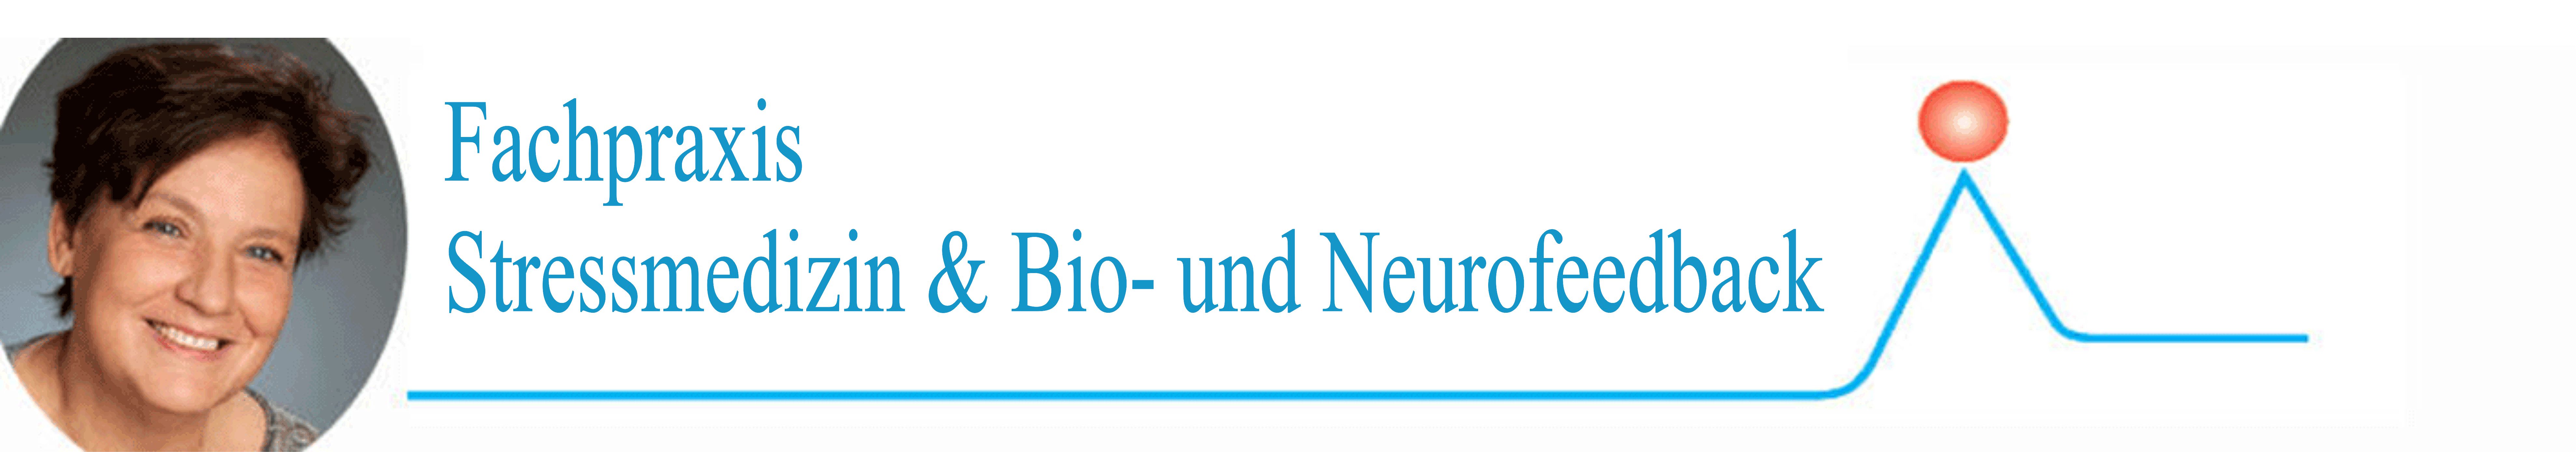 Fachpraxis Stressmedizin & Bio- und Neurofeedback Berlin